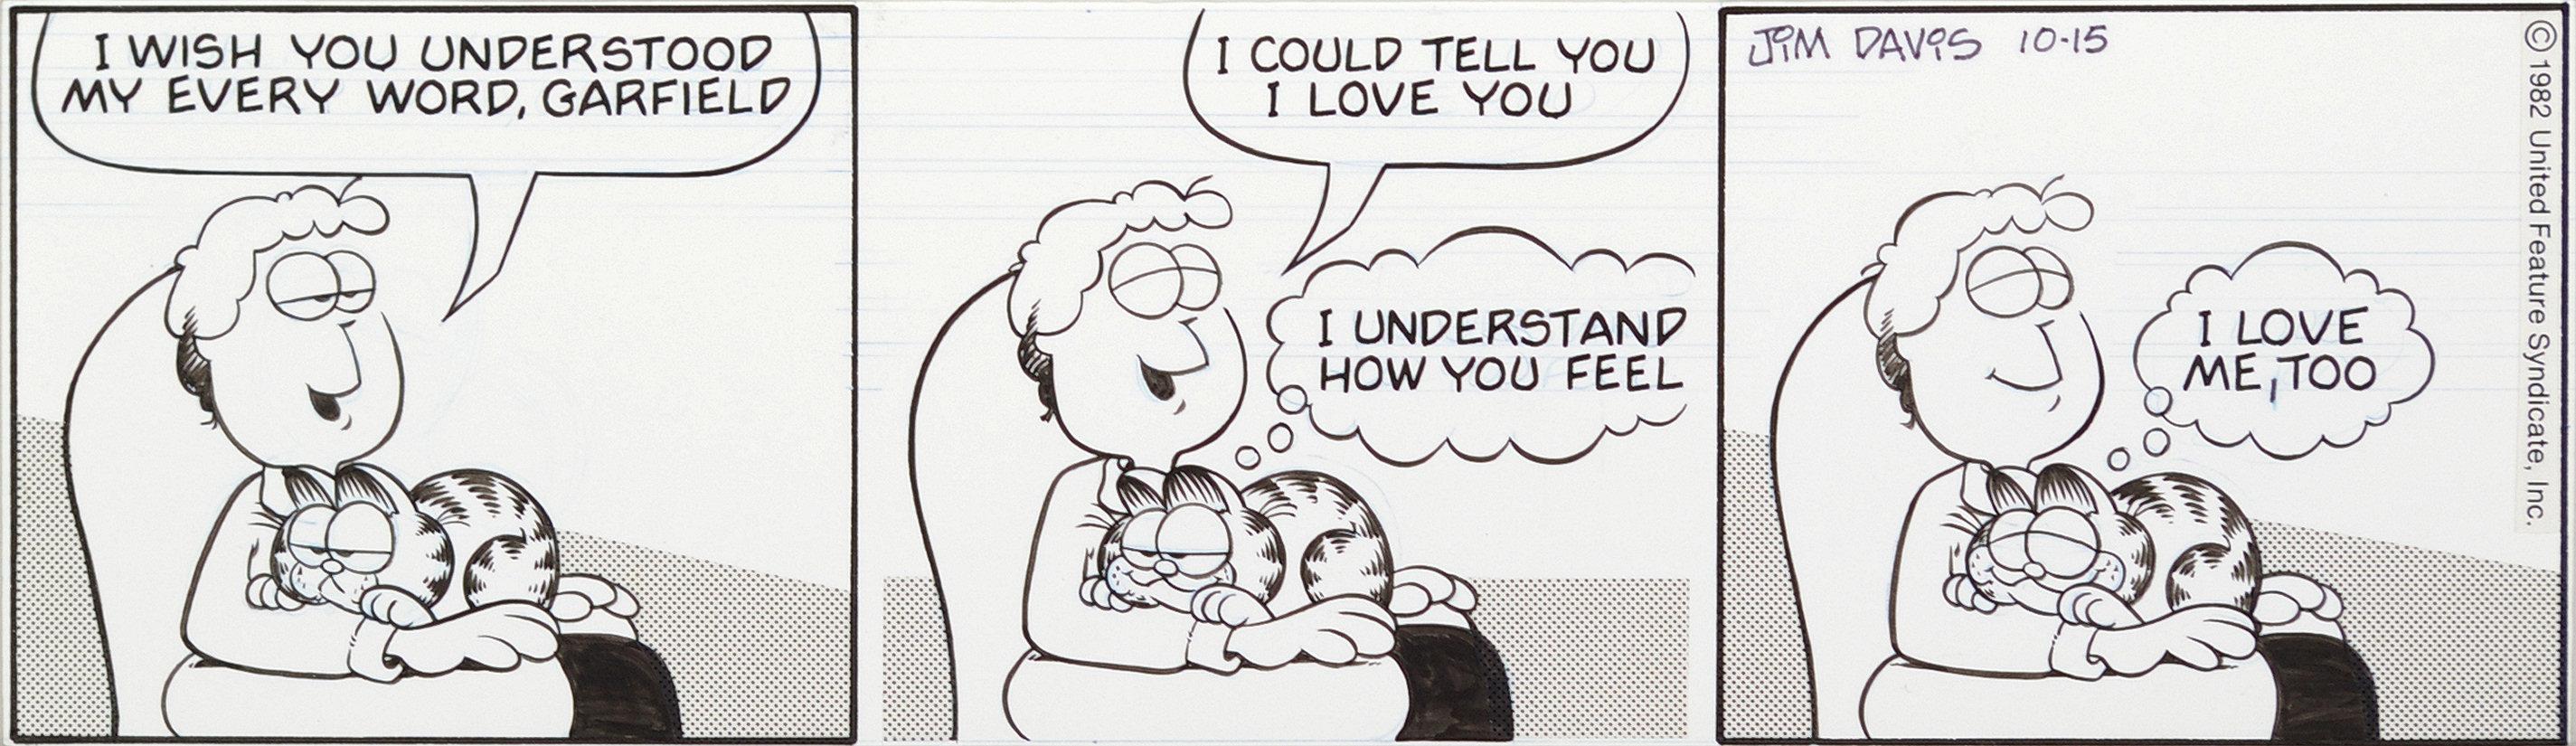 Everyone Loves Garfield, Especially Himself - Contemporary Mixed Media Art by Jim Davis